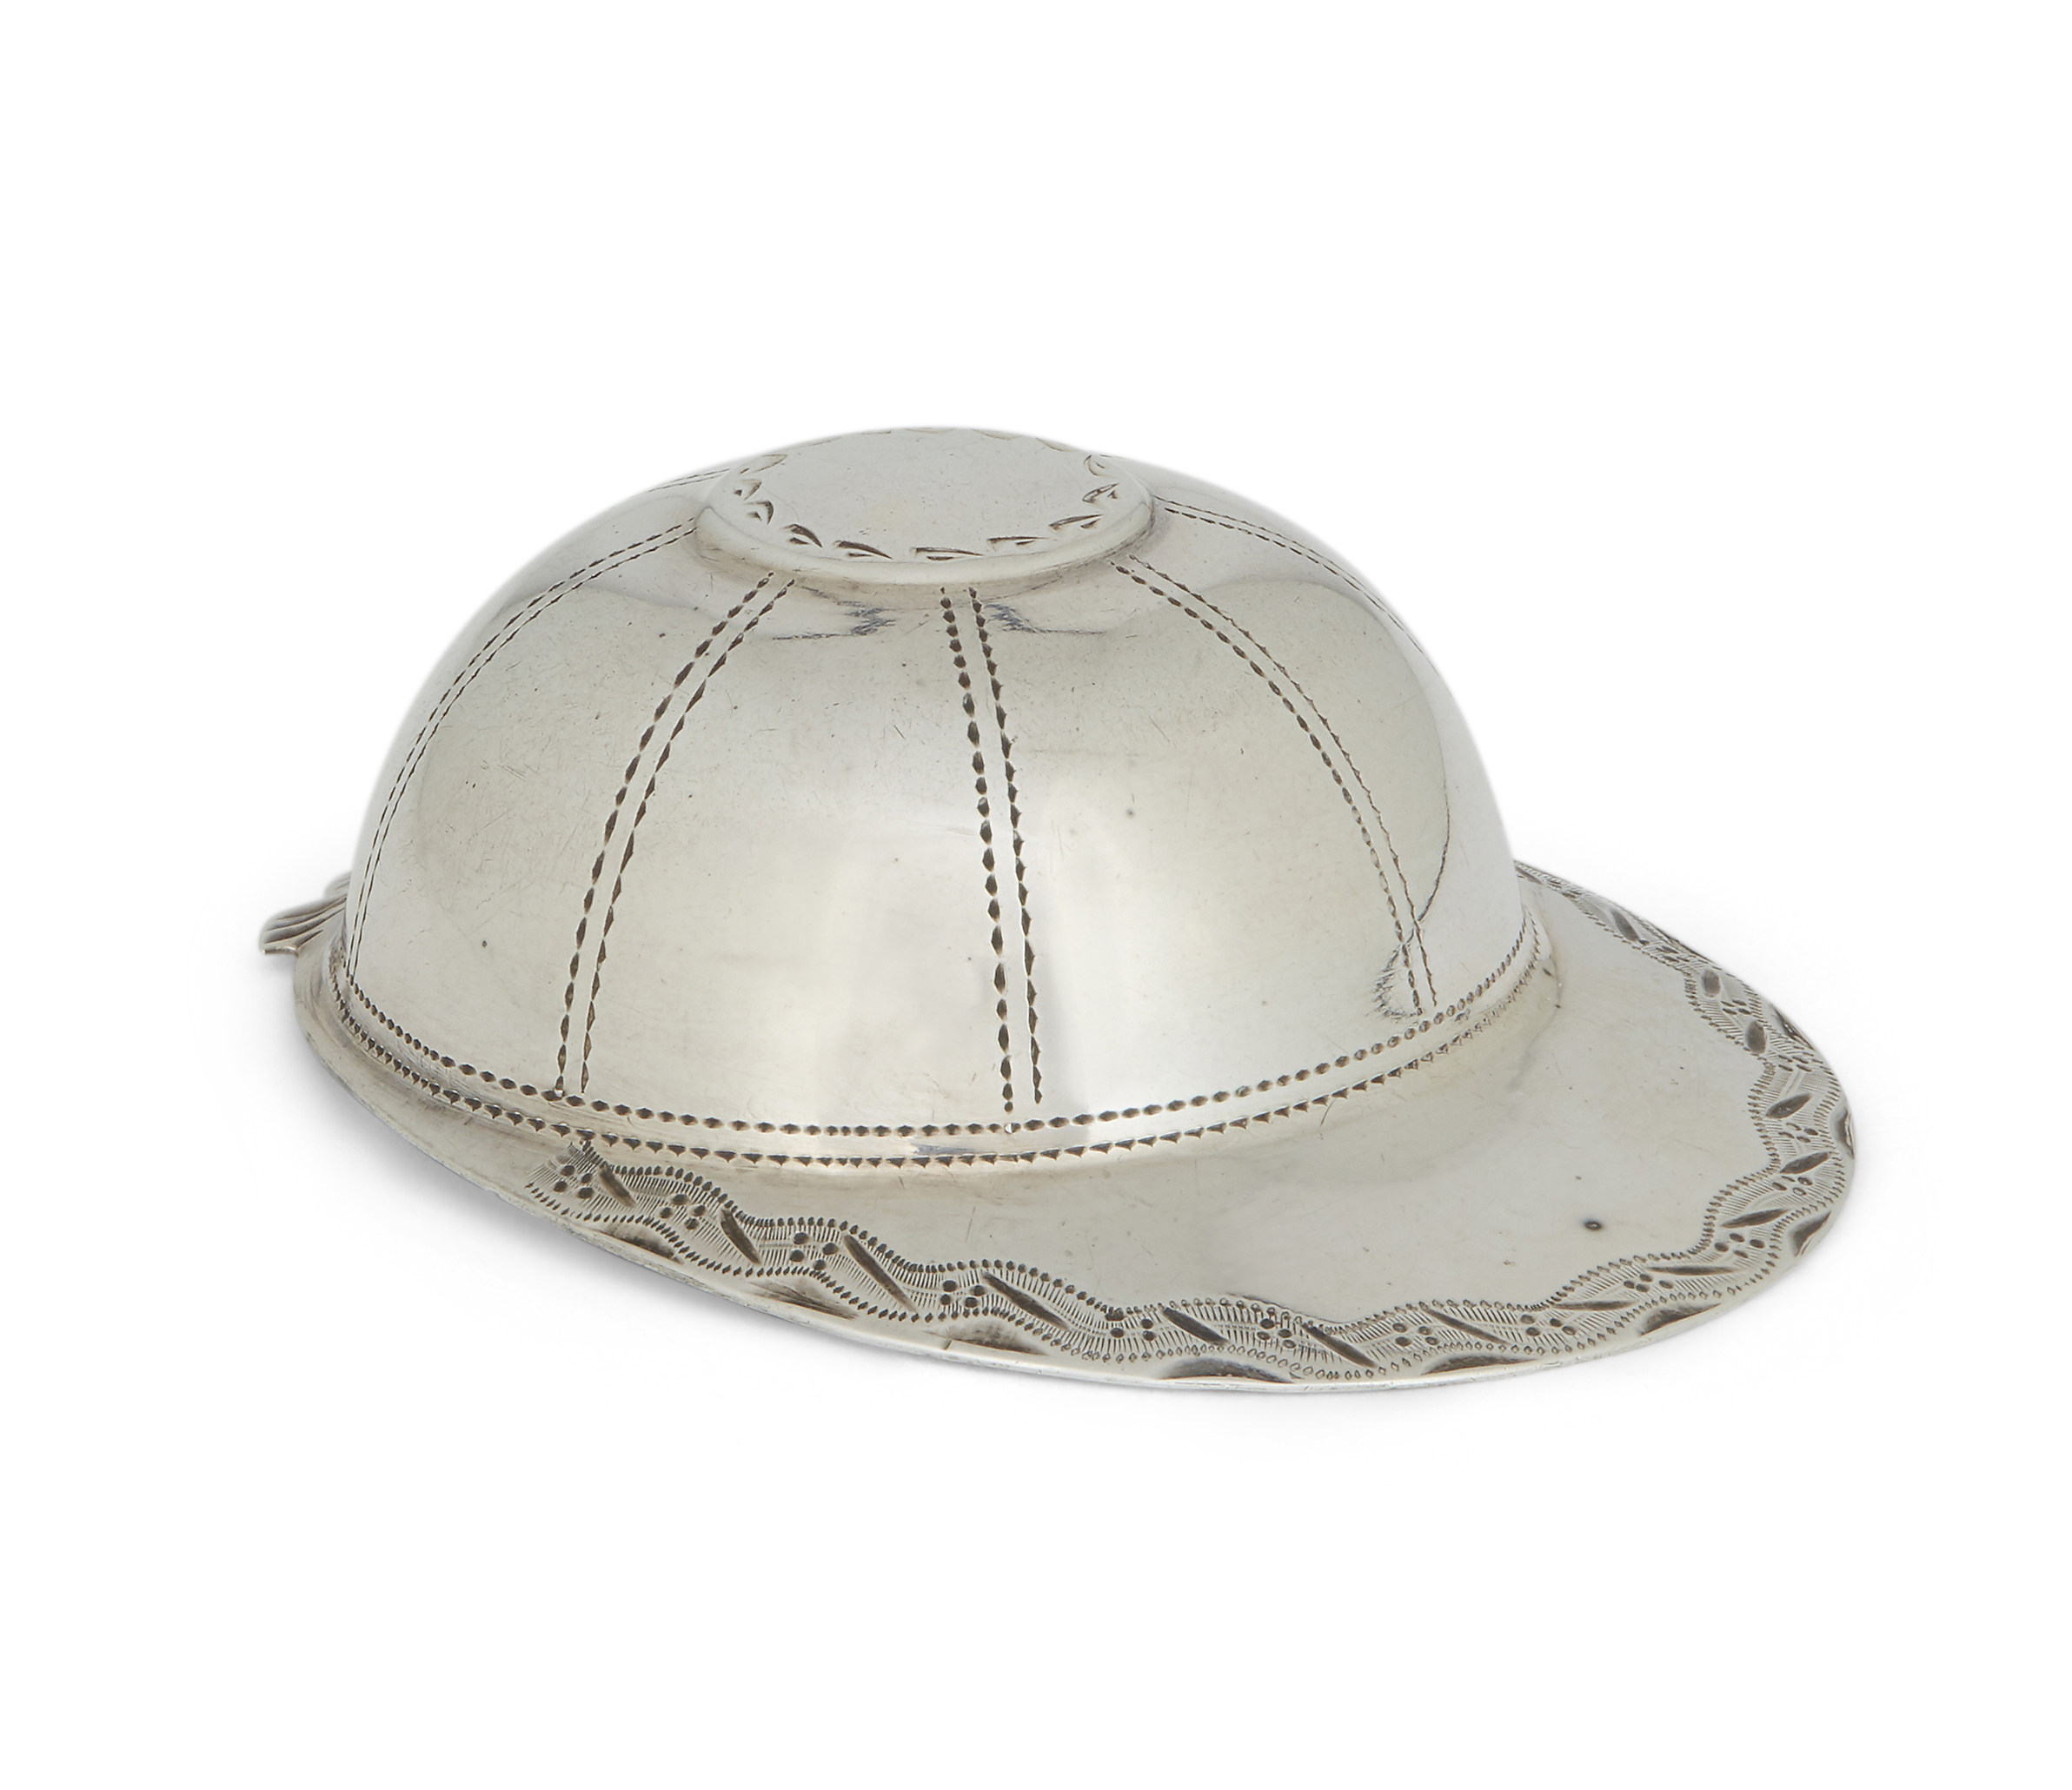 A George IV silver jockey cap caddy spoon, Birmingham, 1823, Joseph Taylor, designed with simulat...